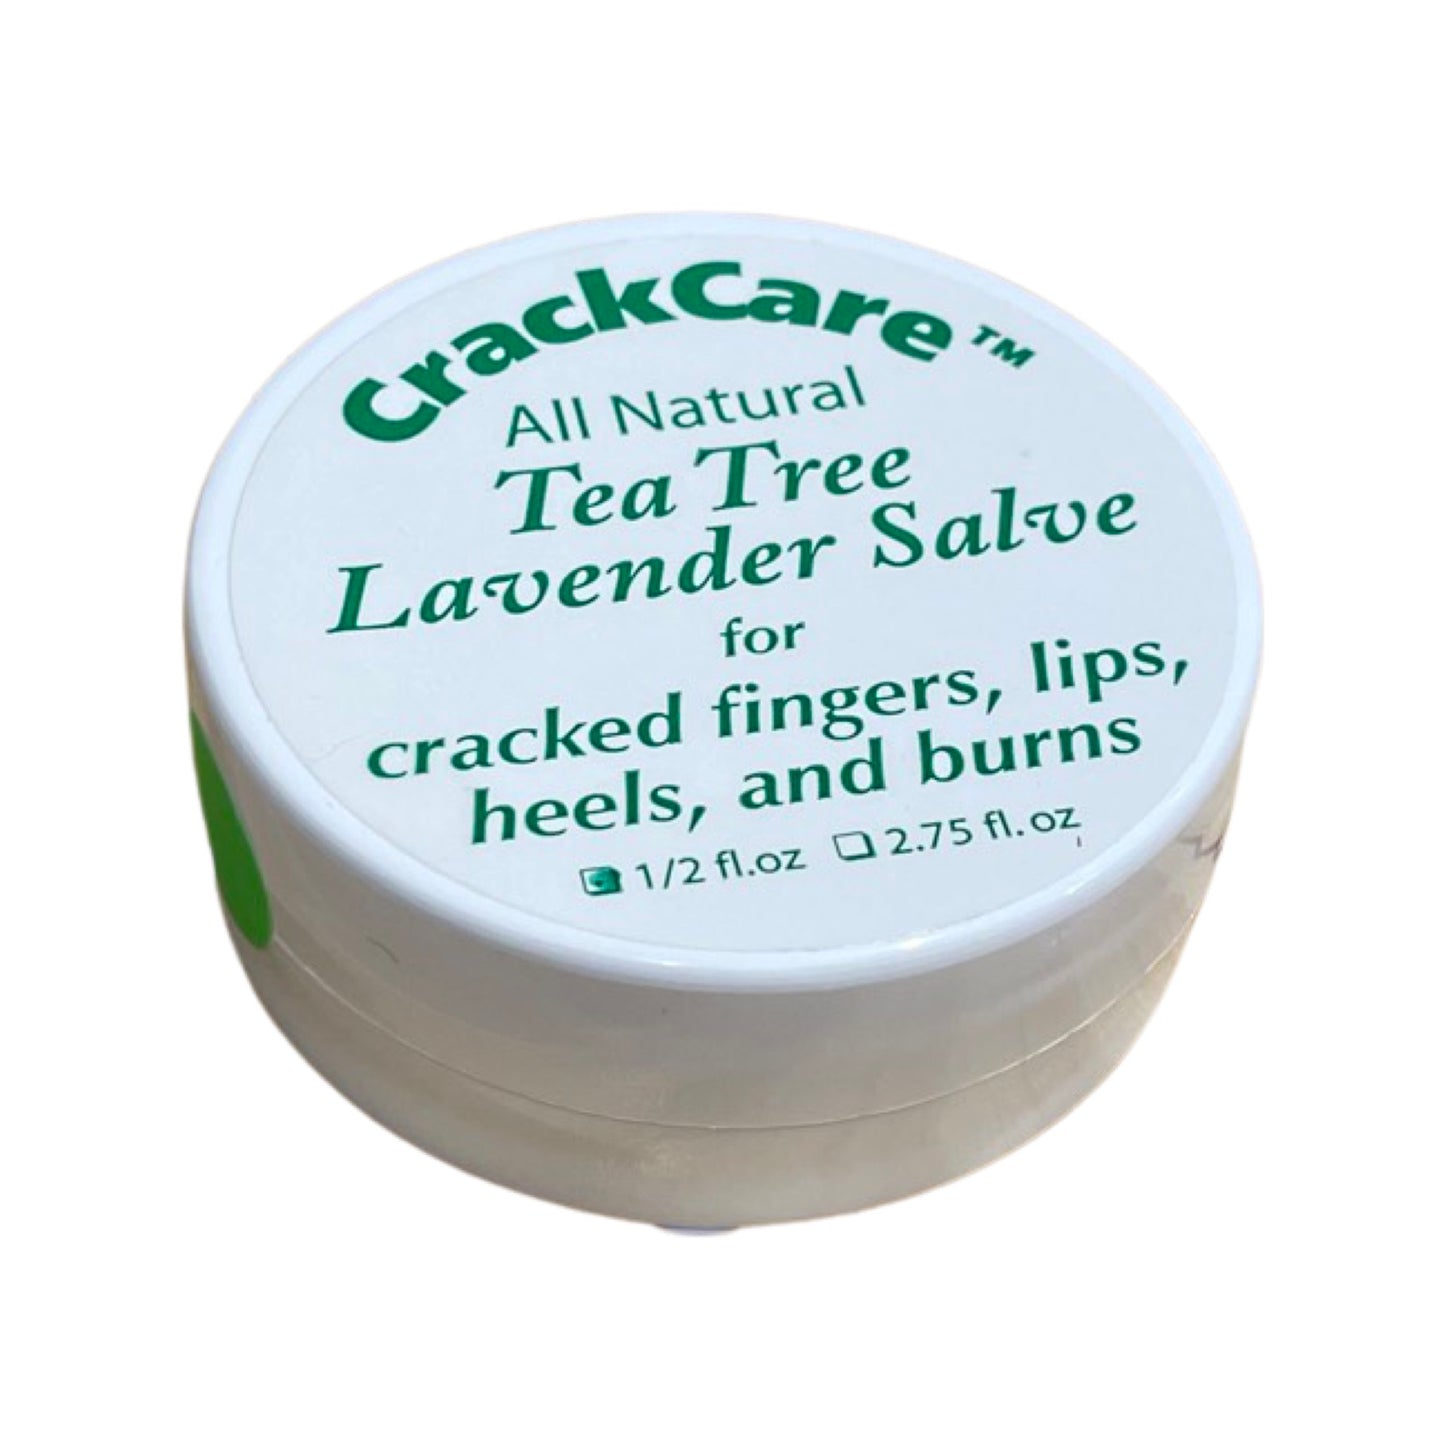 Tea Tree Lavender Salve (Crack Care)- Online